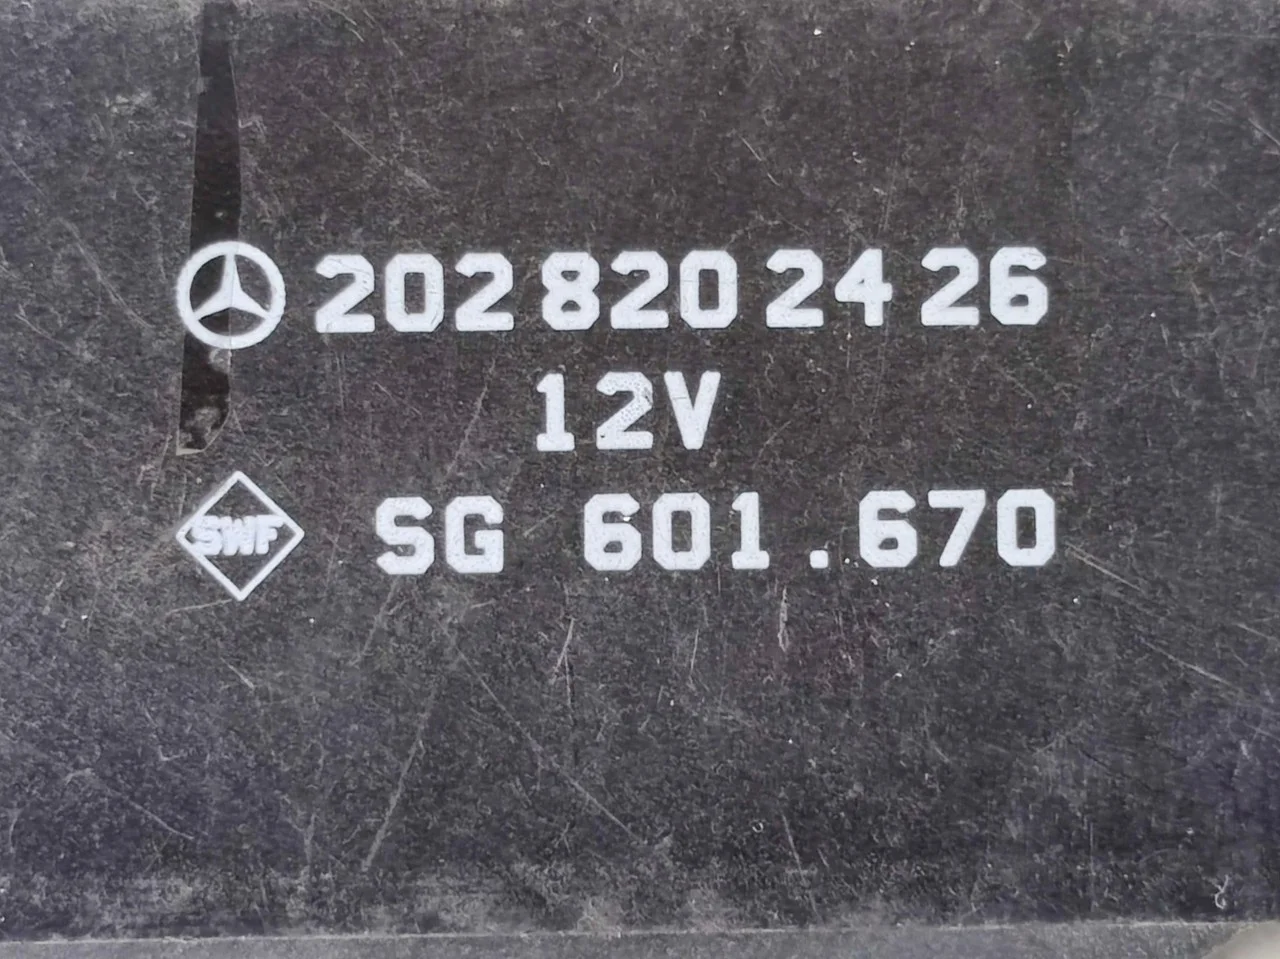 Блок подогрева задних сидений Mercedes-Benz C-class W202 A2028202426